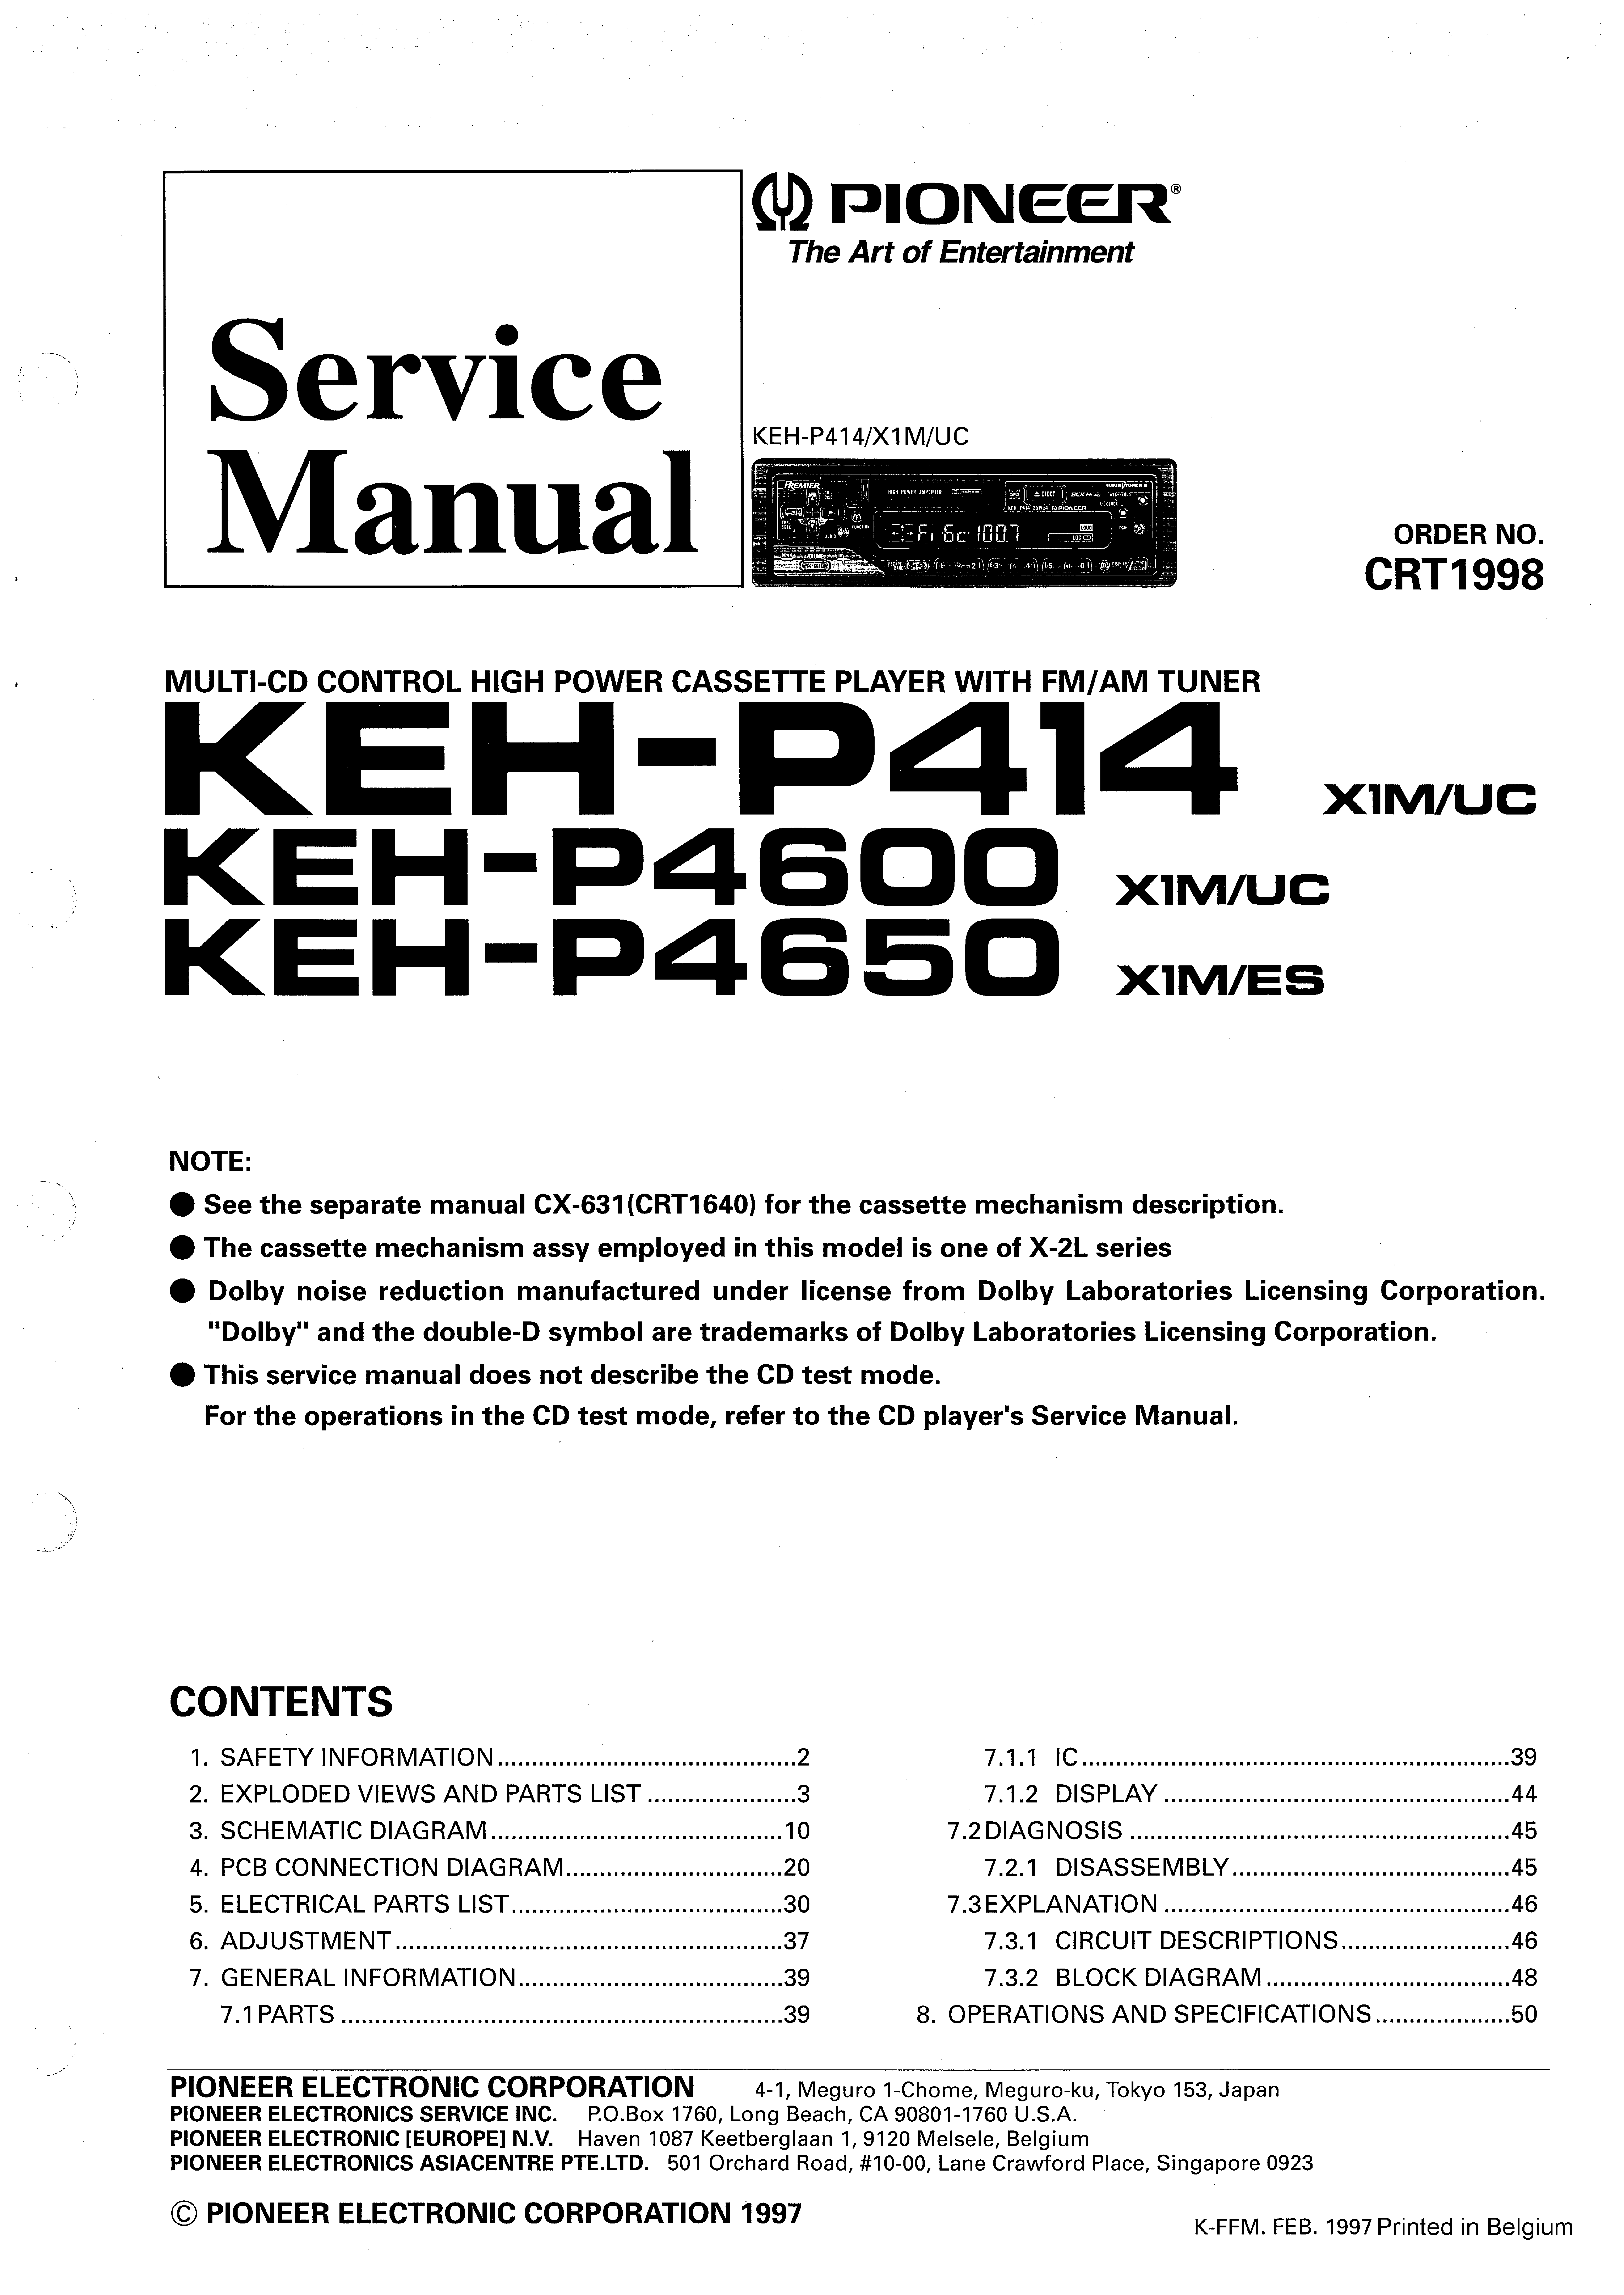 PIONEER KEH-P414 P4600 P4650 CRT1998 SM service manual (1st page)